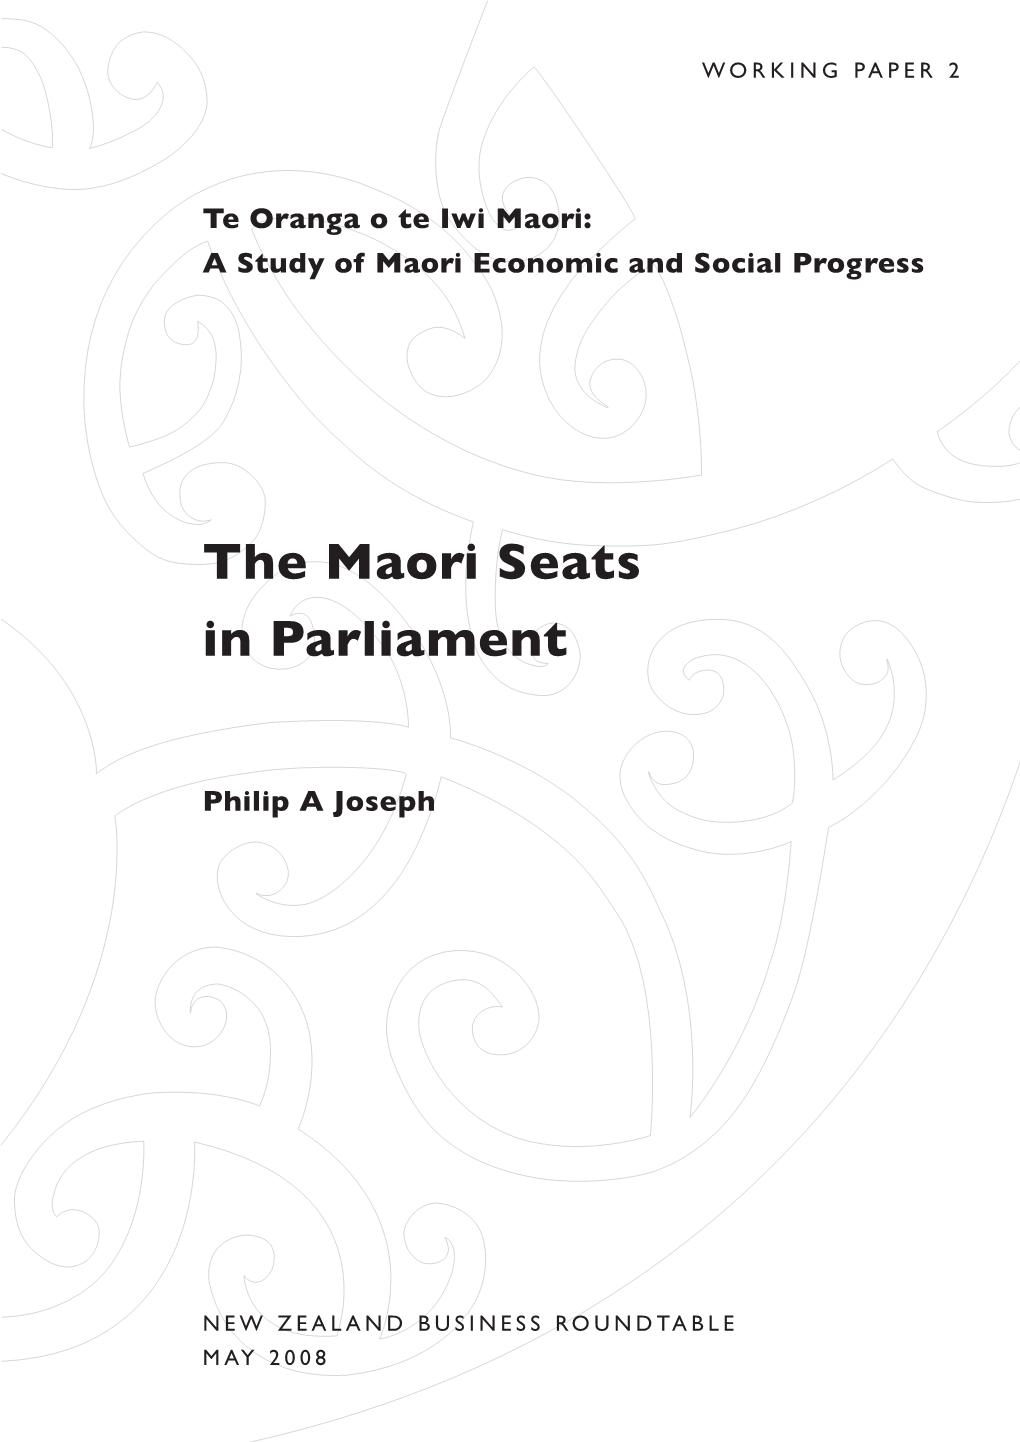 The Maori Seats in Parliament